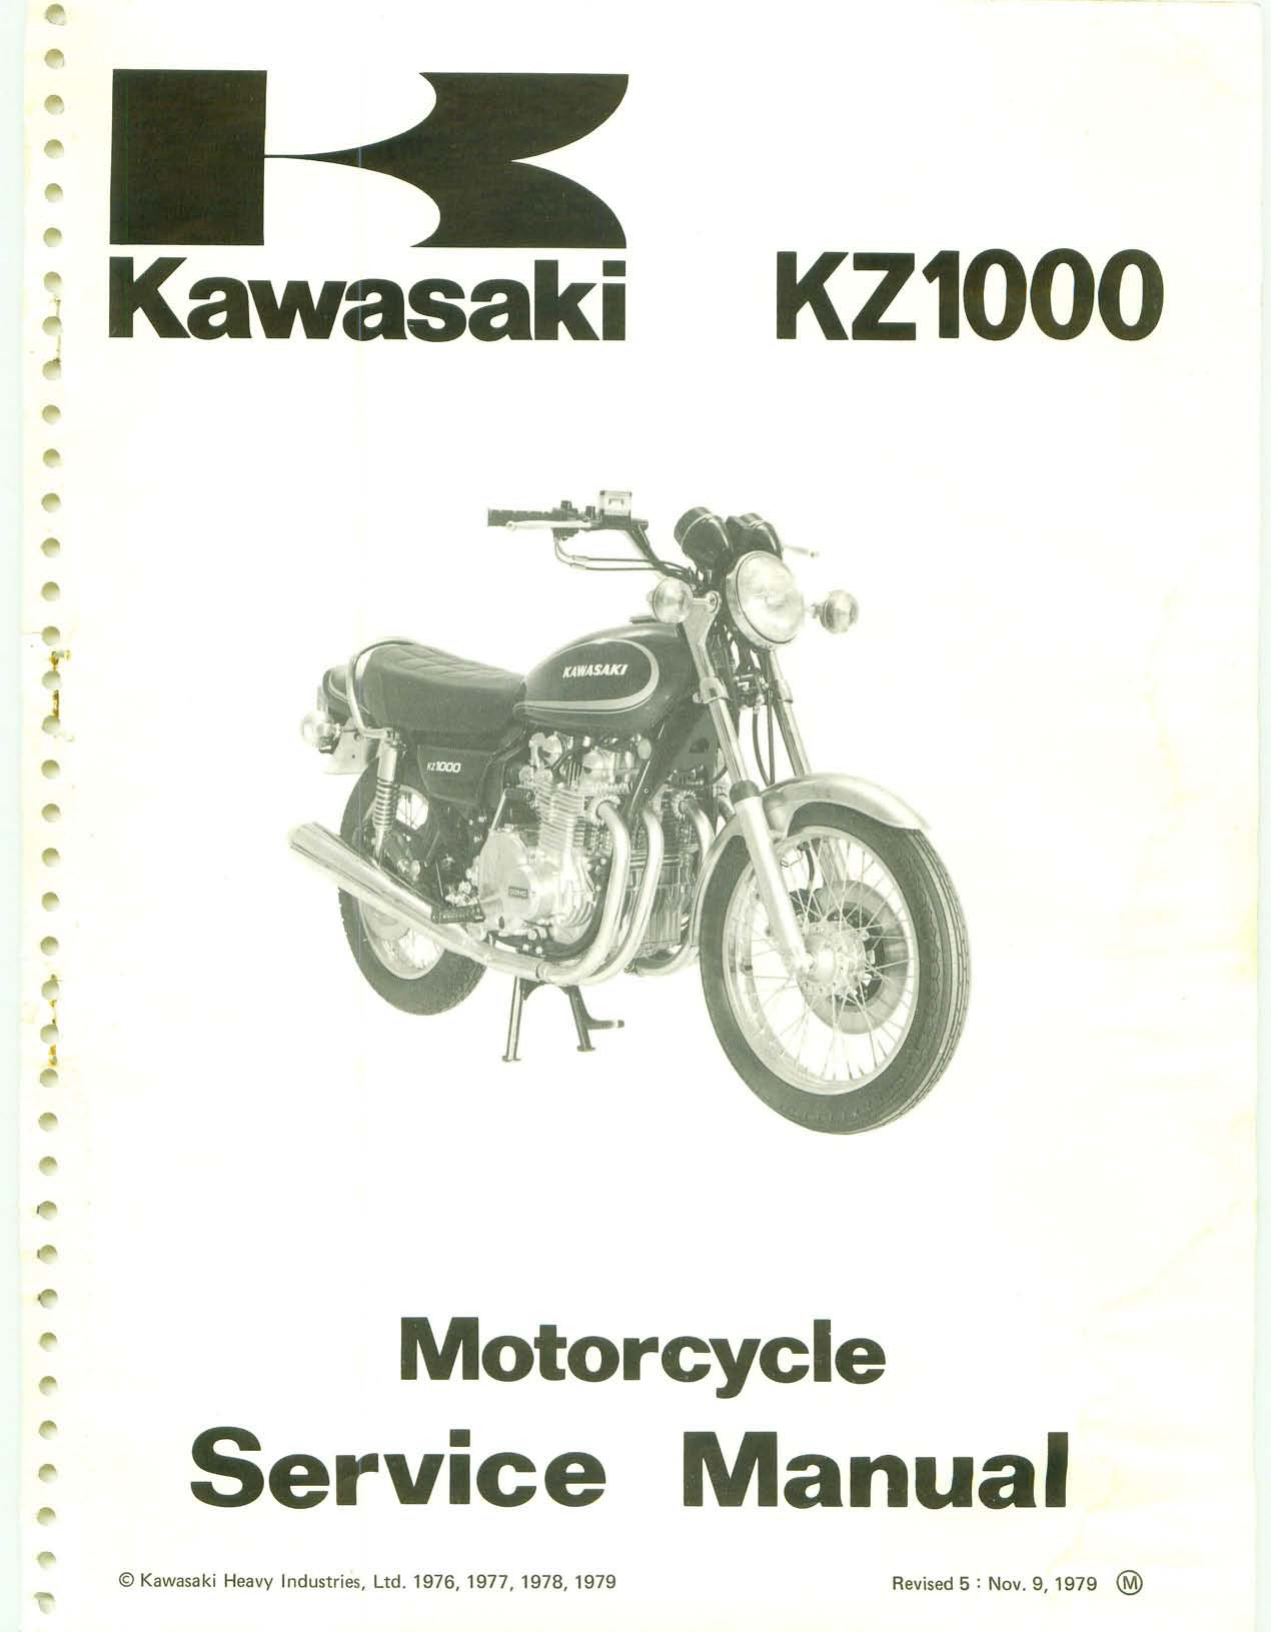 1976-1980 Kawasaki KZ1000 service manual Preview image 6